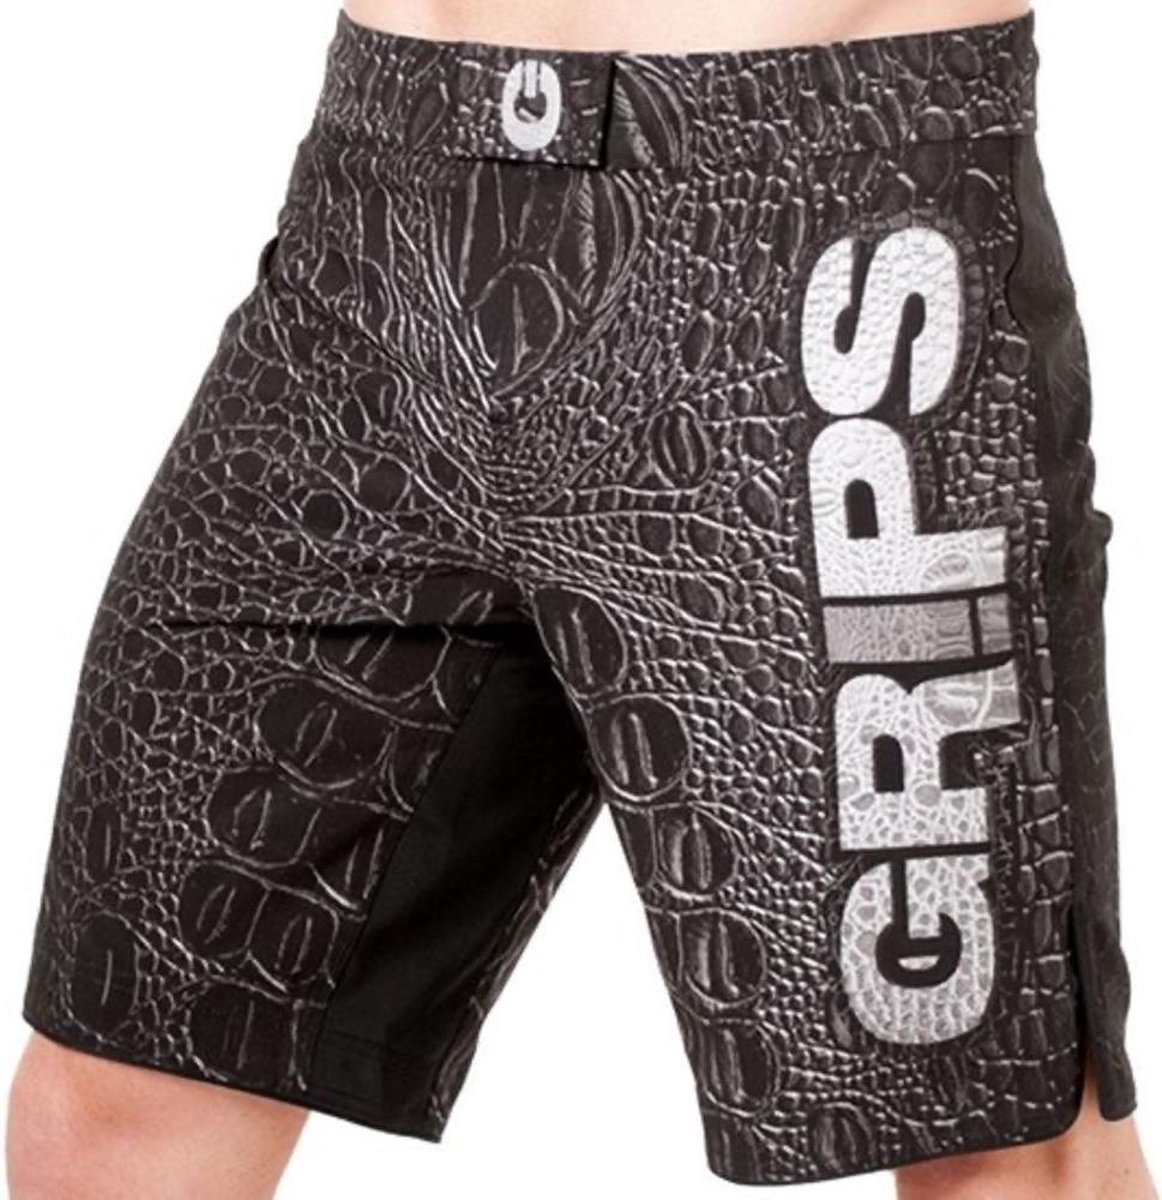 GRIPS Crocodile MMA / BJJ Fight Shorts M - Jeans Maat 32